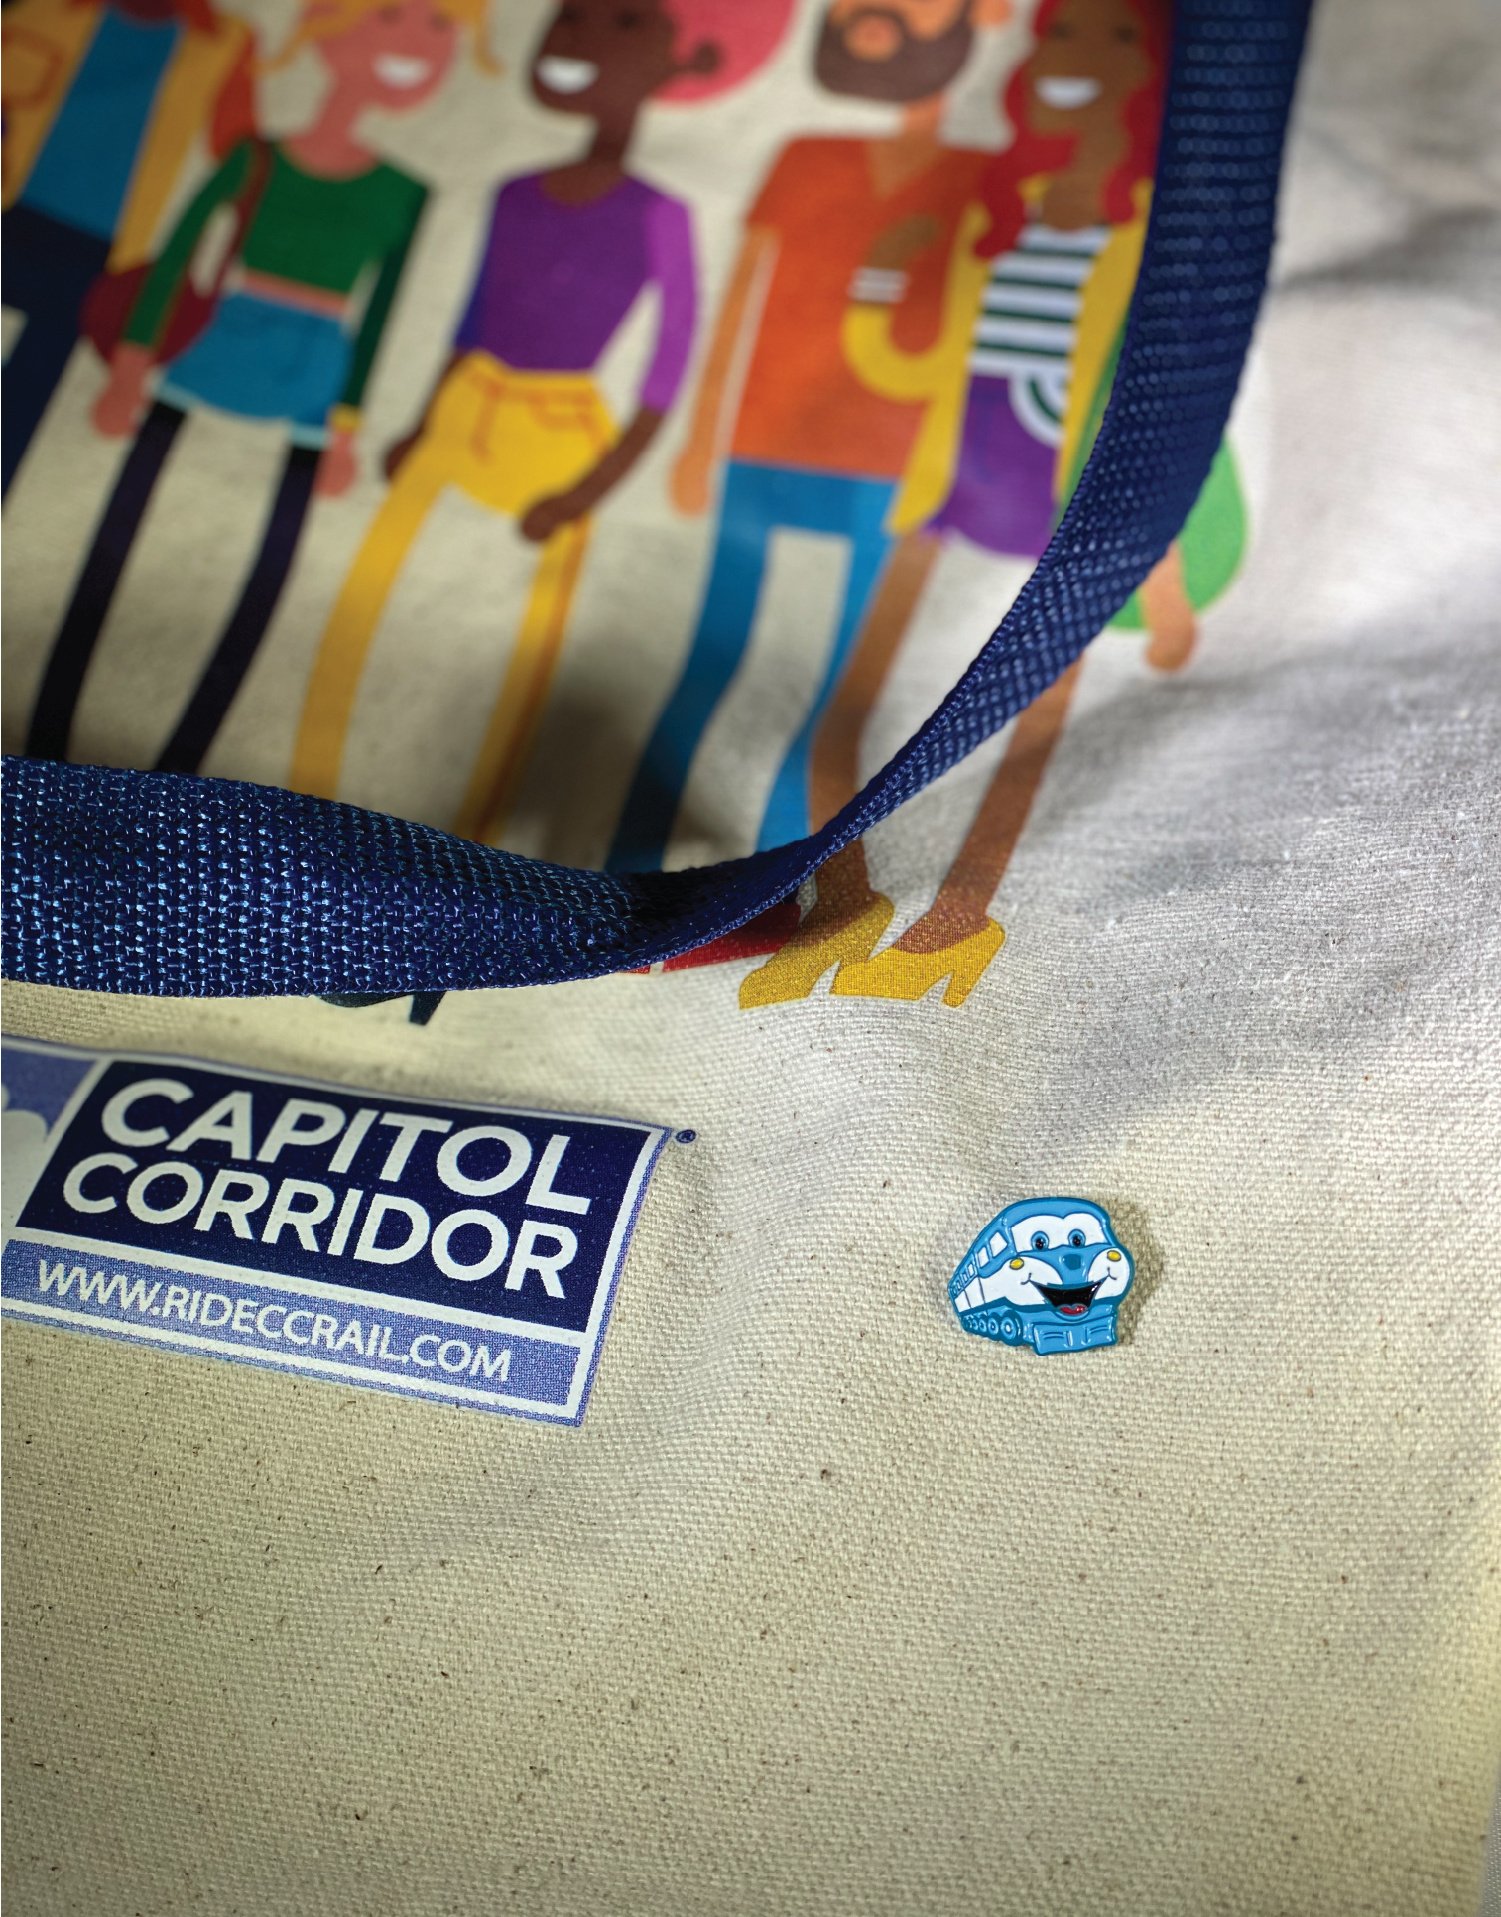 Capitol Corridor Cappy Enamel Pin